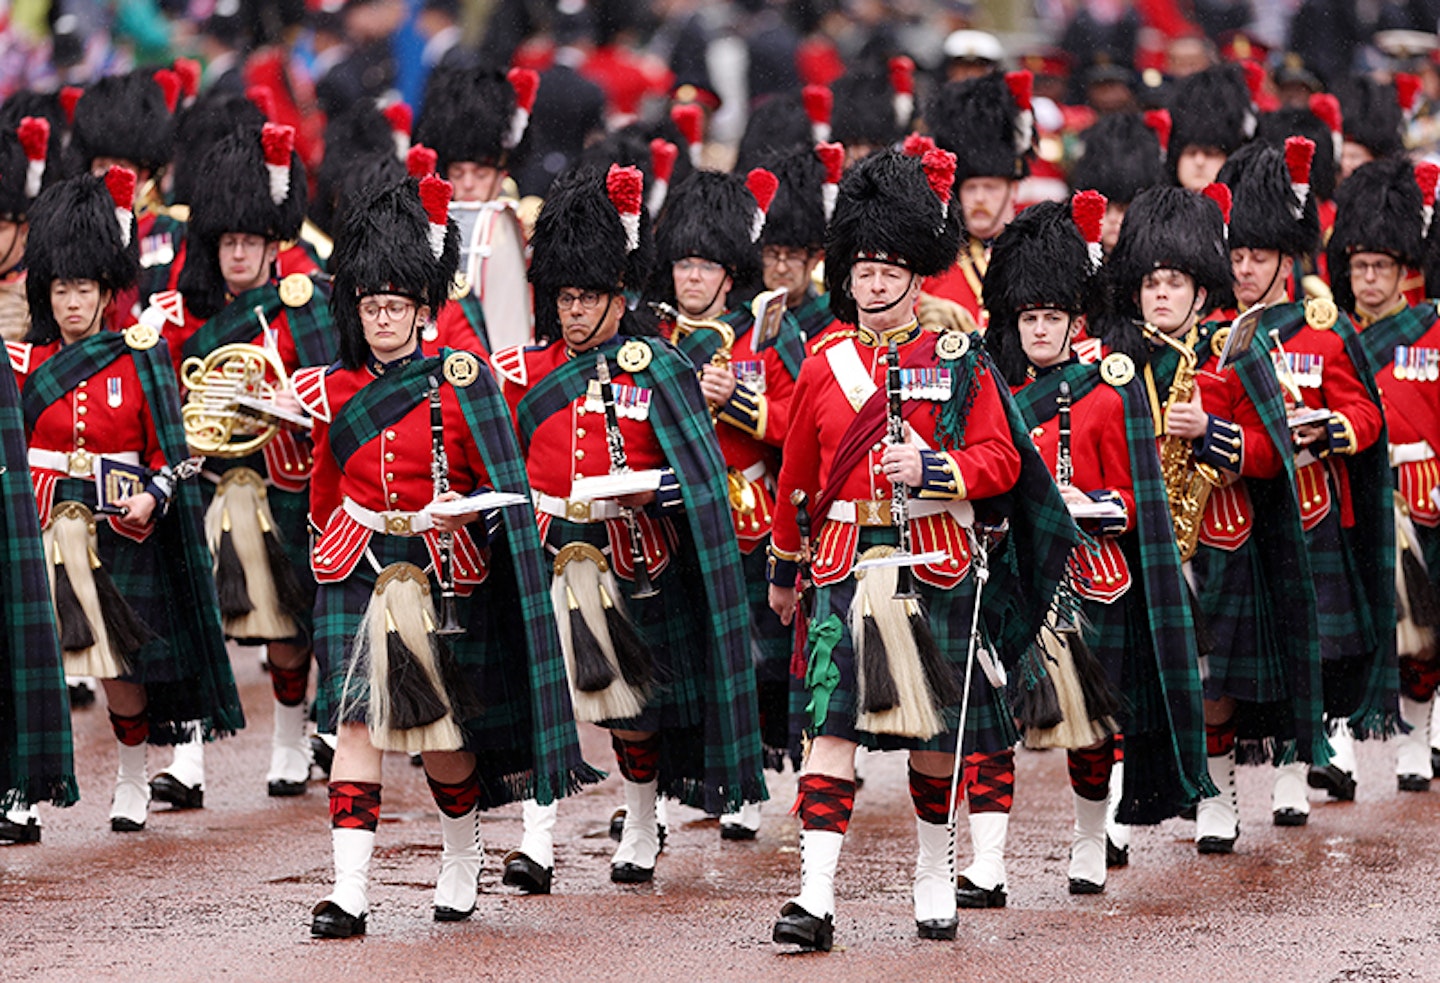 Scottish procession